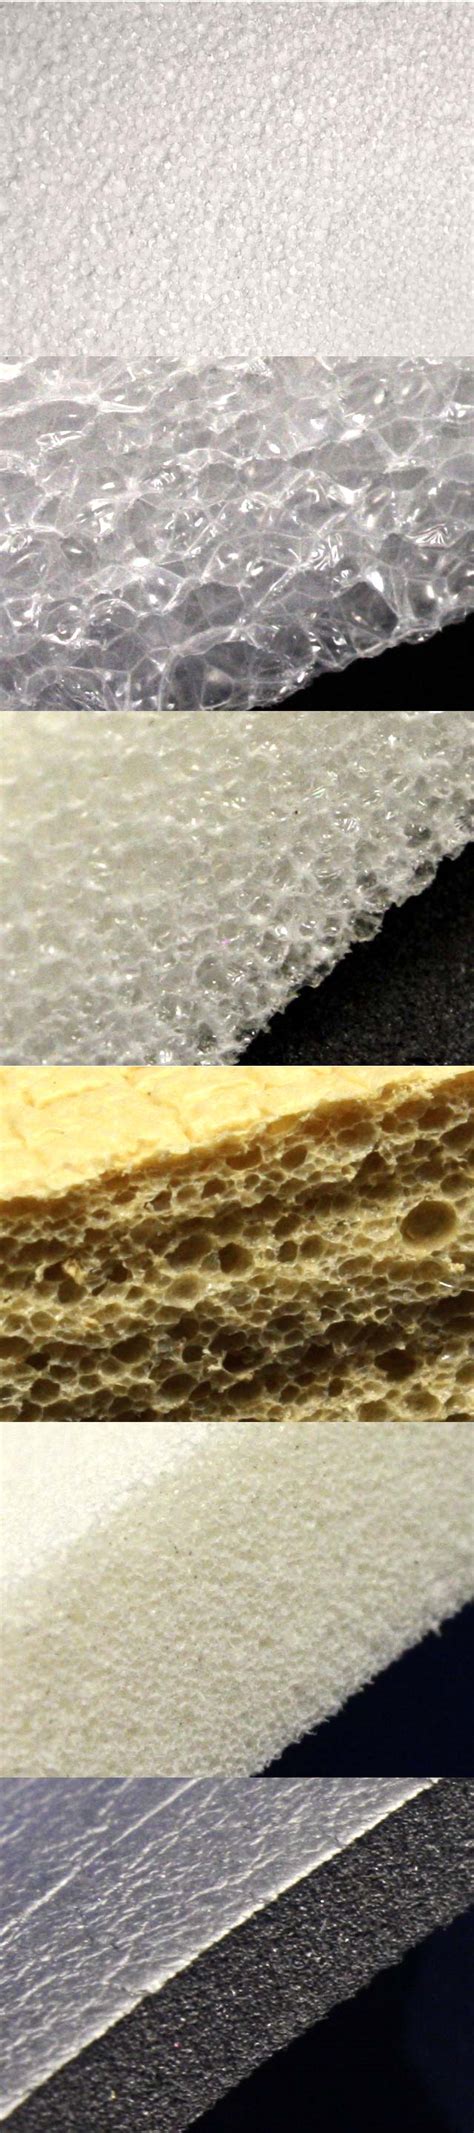 A Closer Look At Foam Part Ii Closed Cell Foam Foam Factory Inc Blog